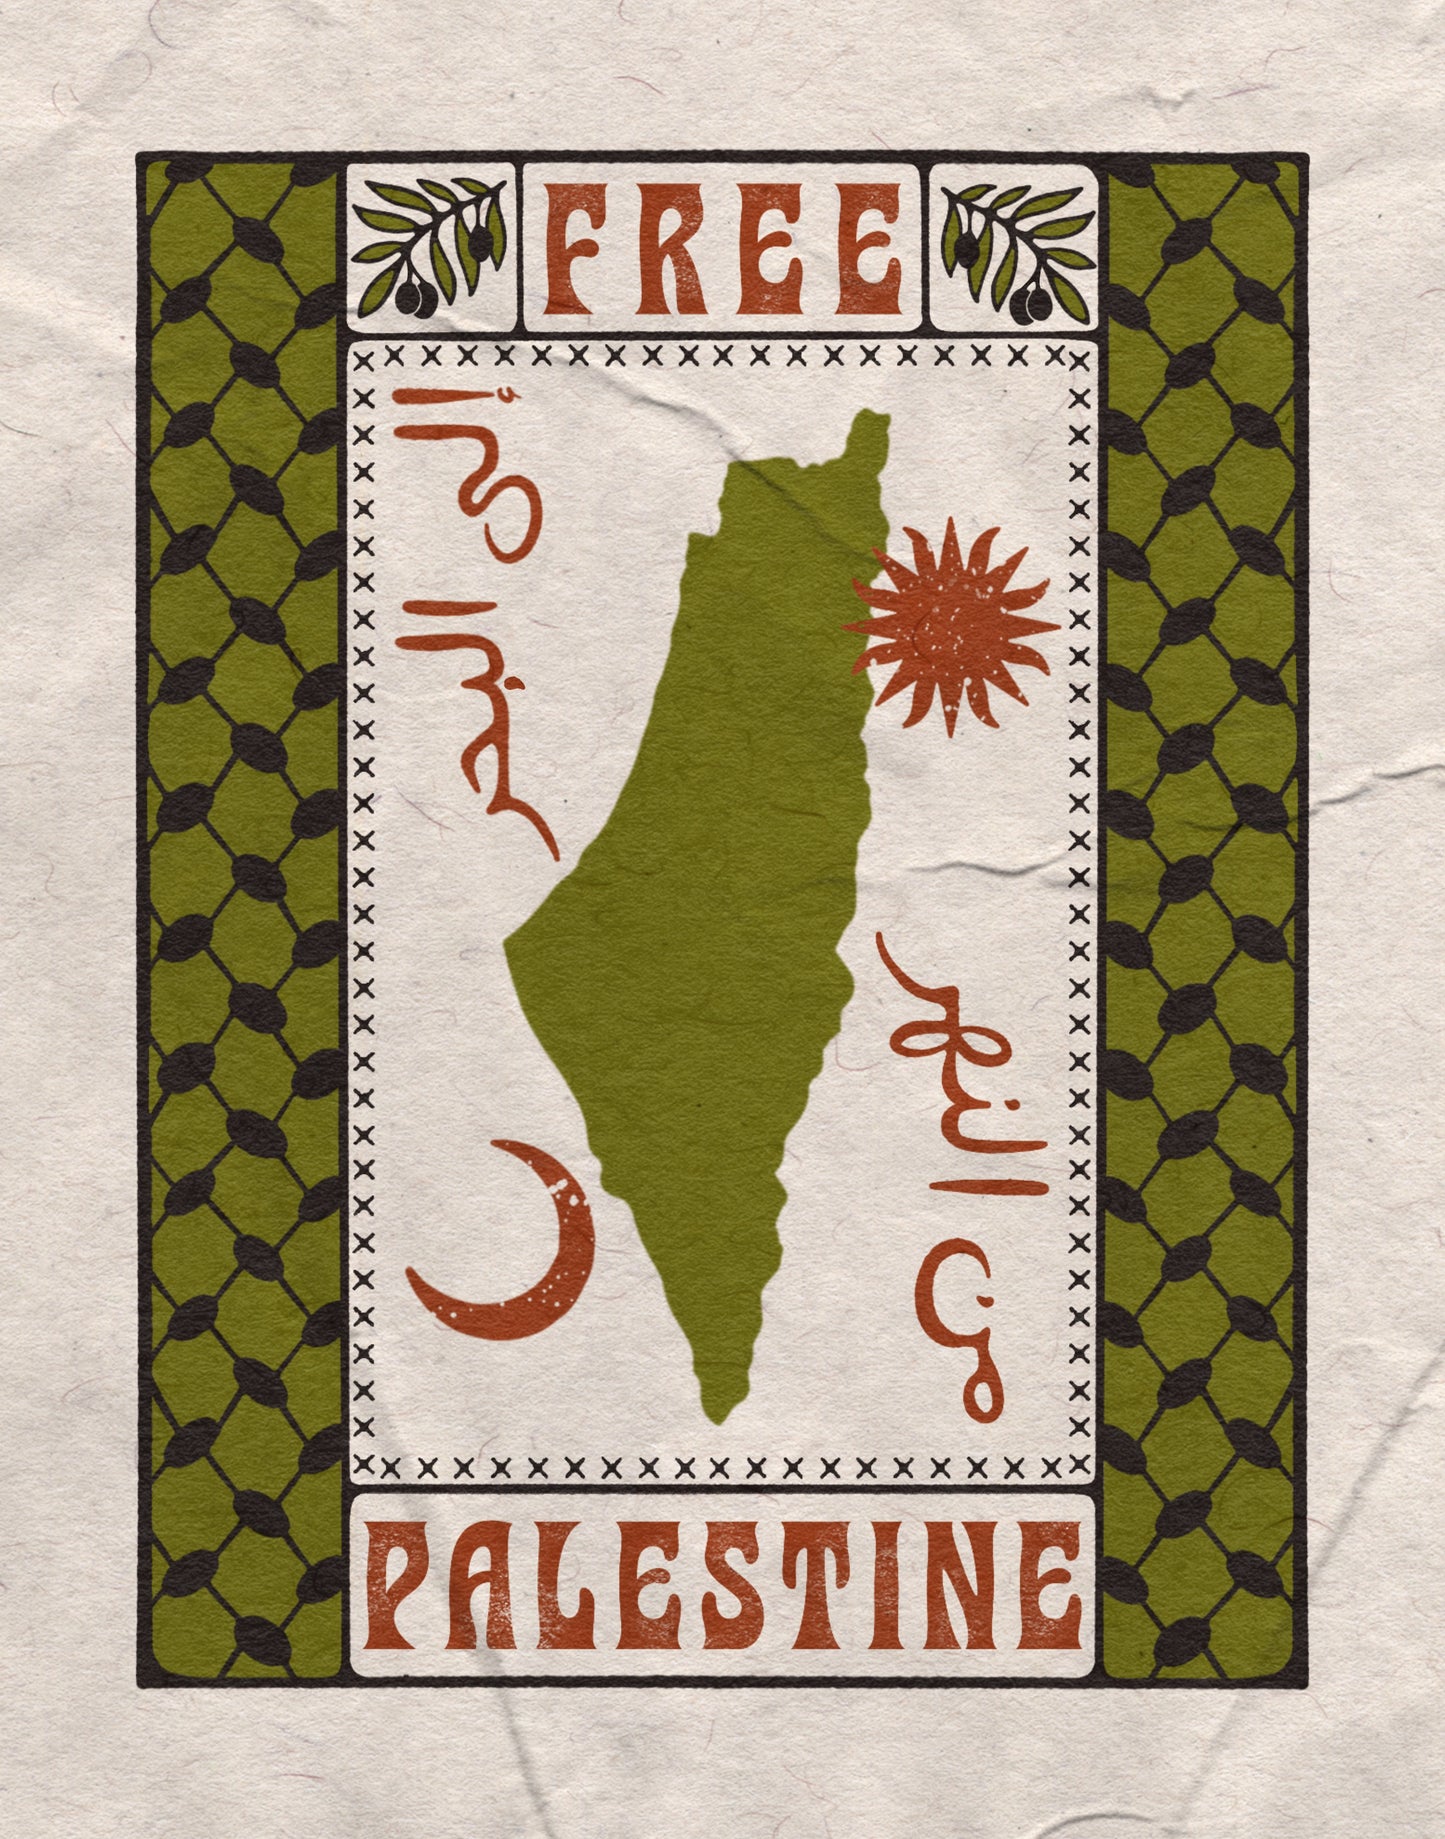 Free Palestine Poster (Digital Download)